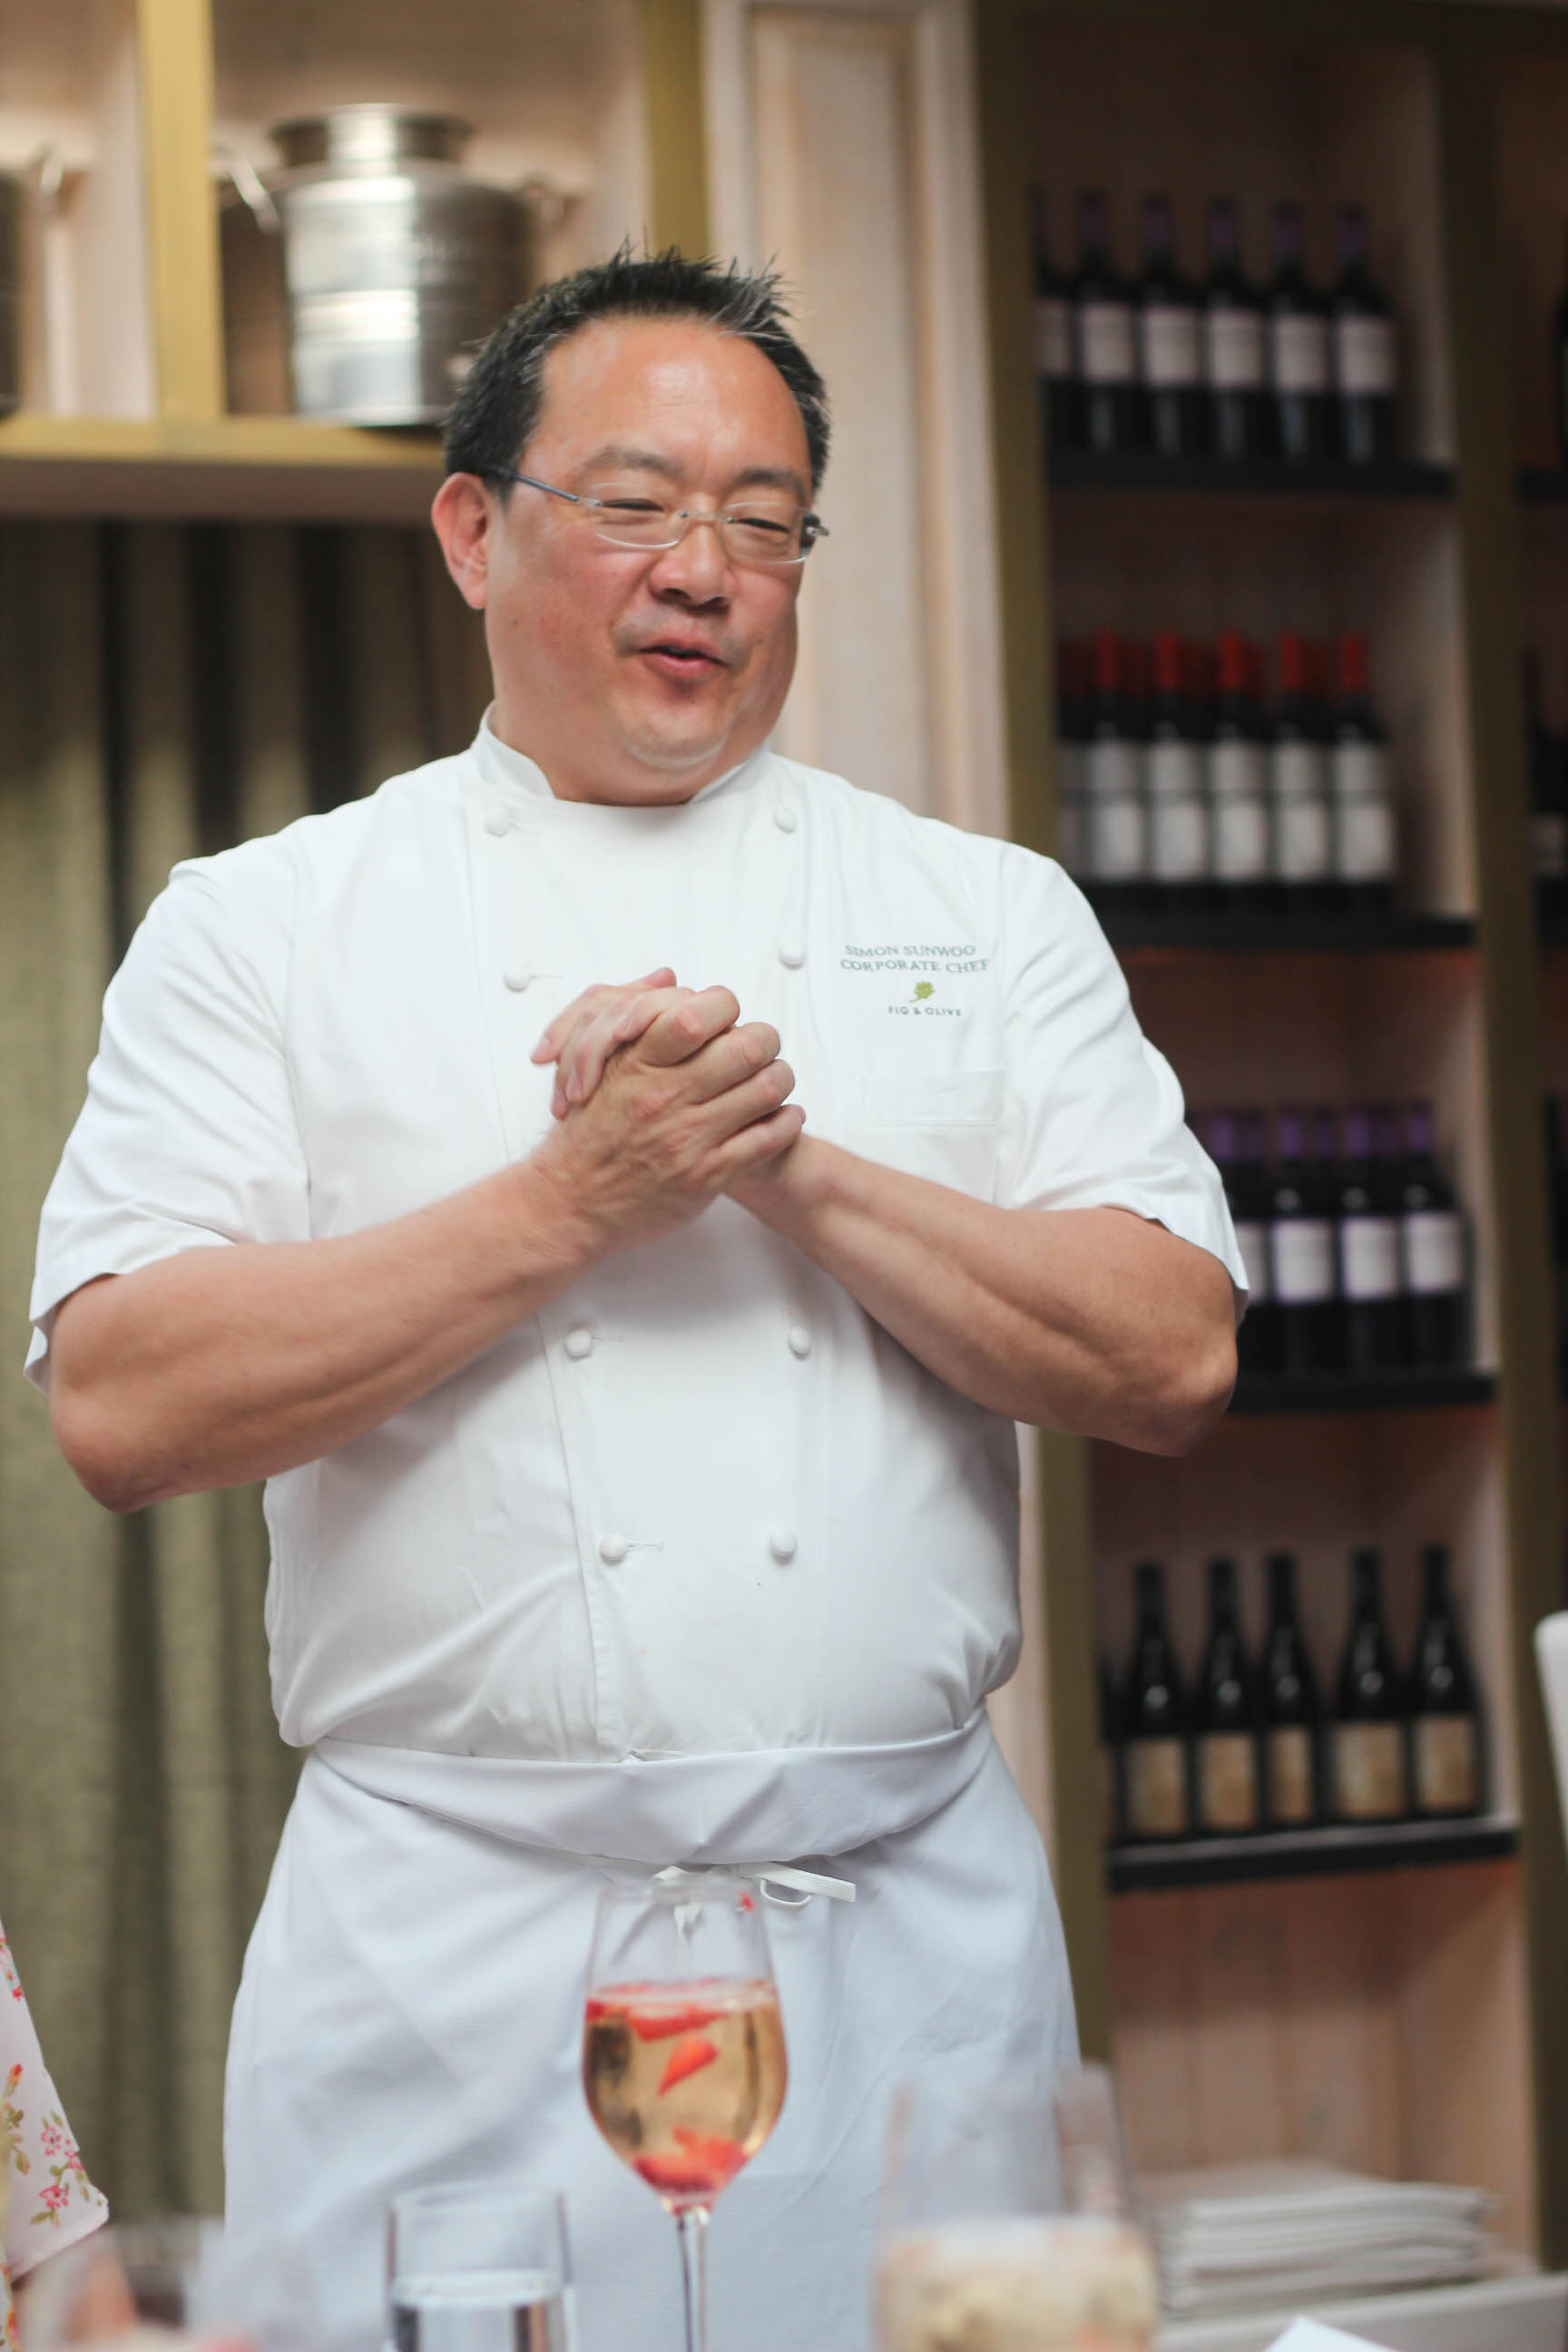 Chef Simon Sunwoo of Fig and Olive